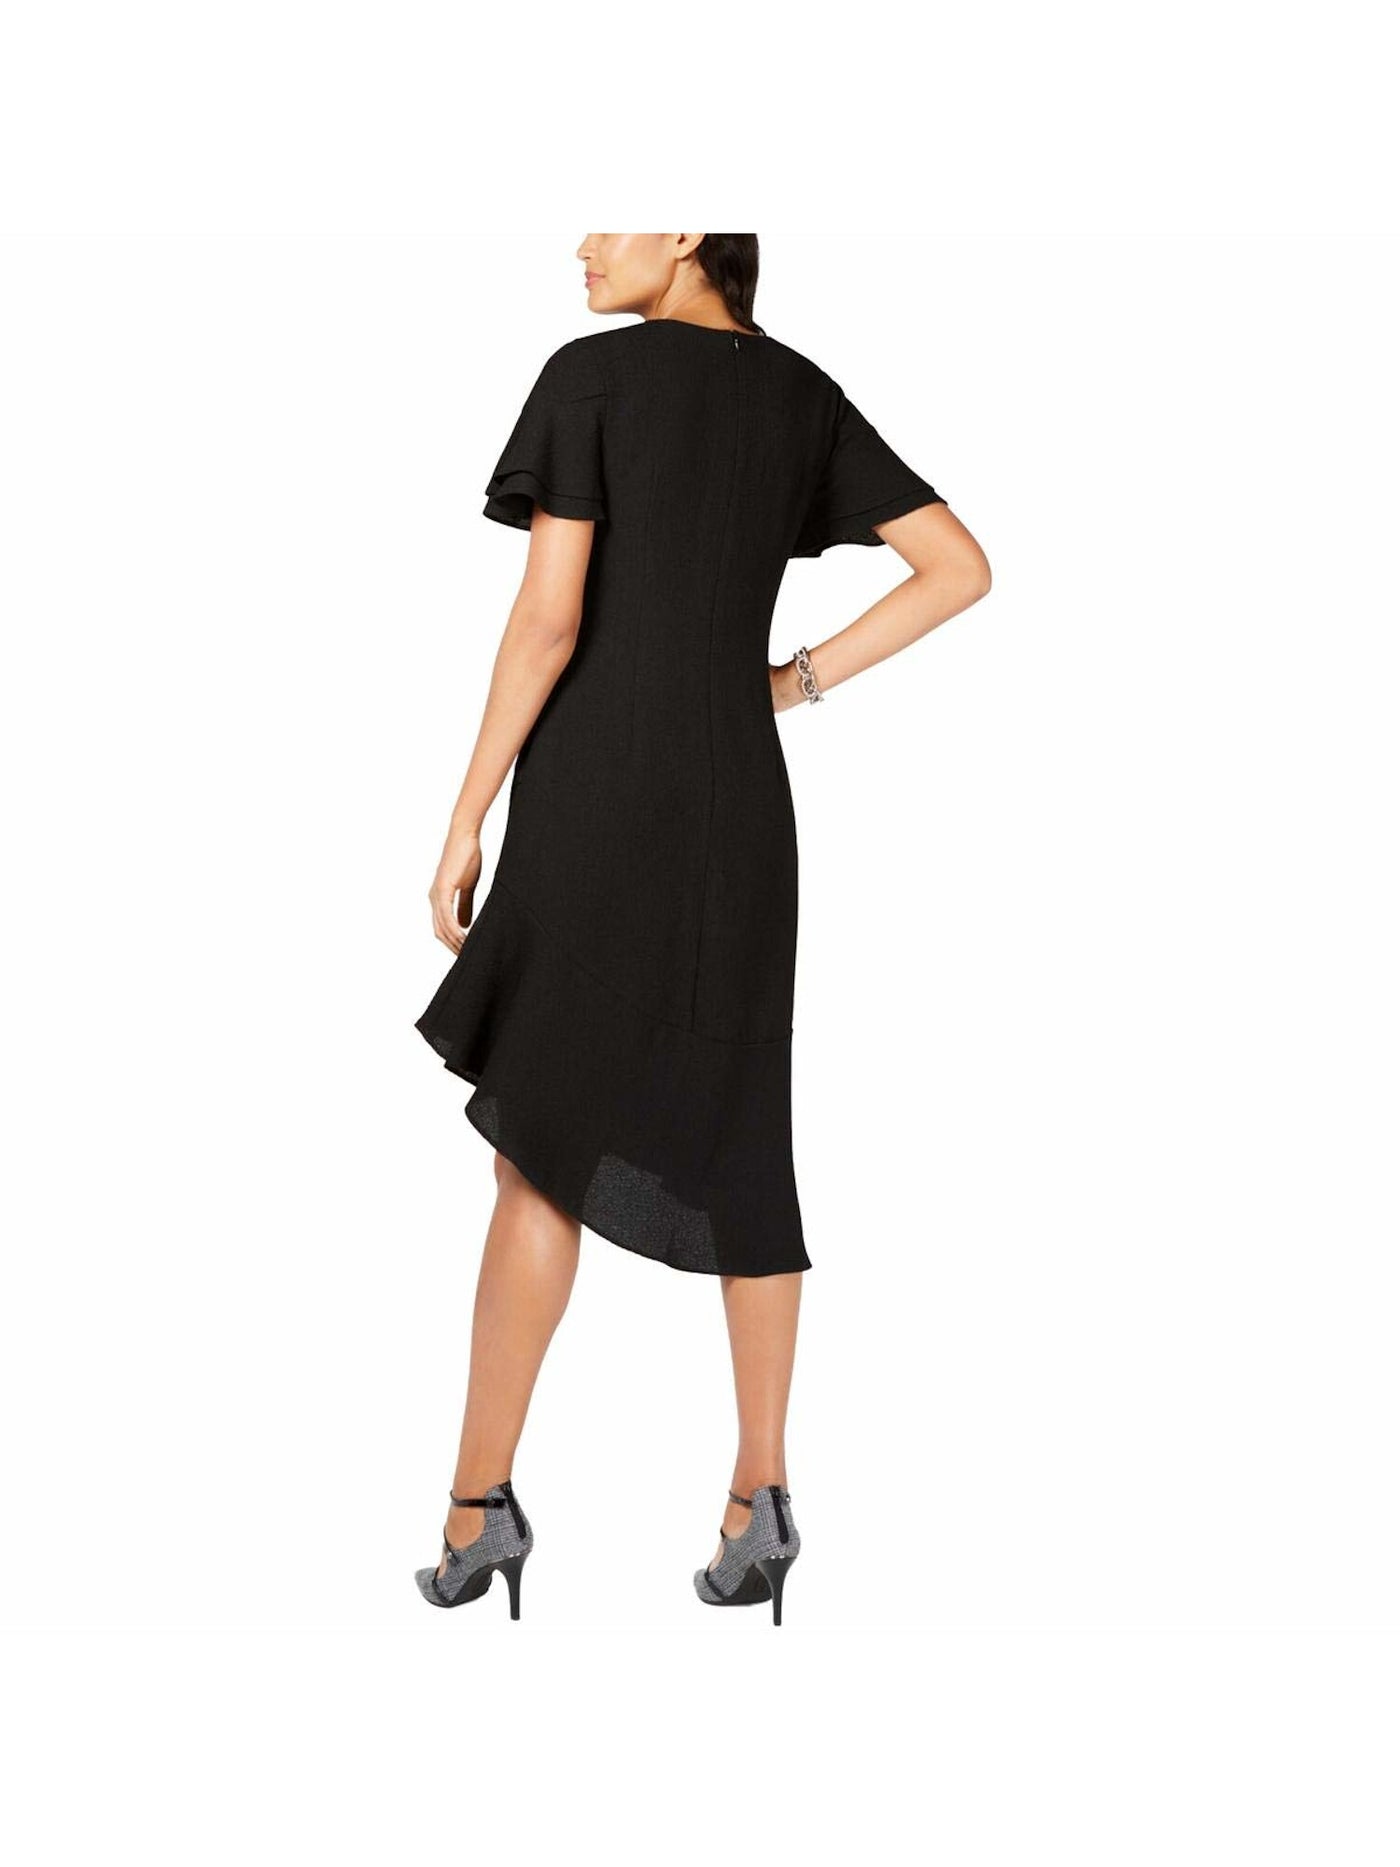 ALFANI Womens Black Short Sleeve Jewel Neck Above The Knee Layered Dress 8